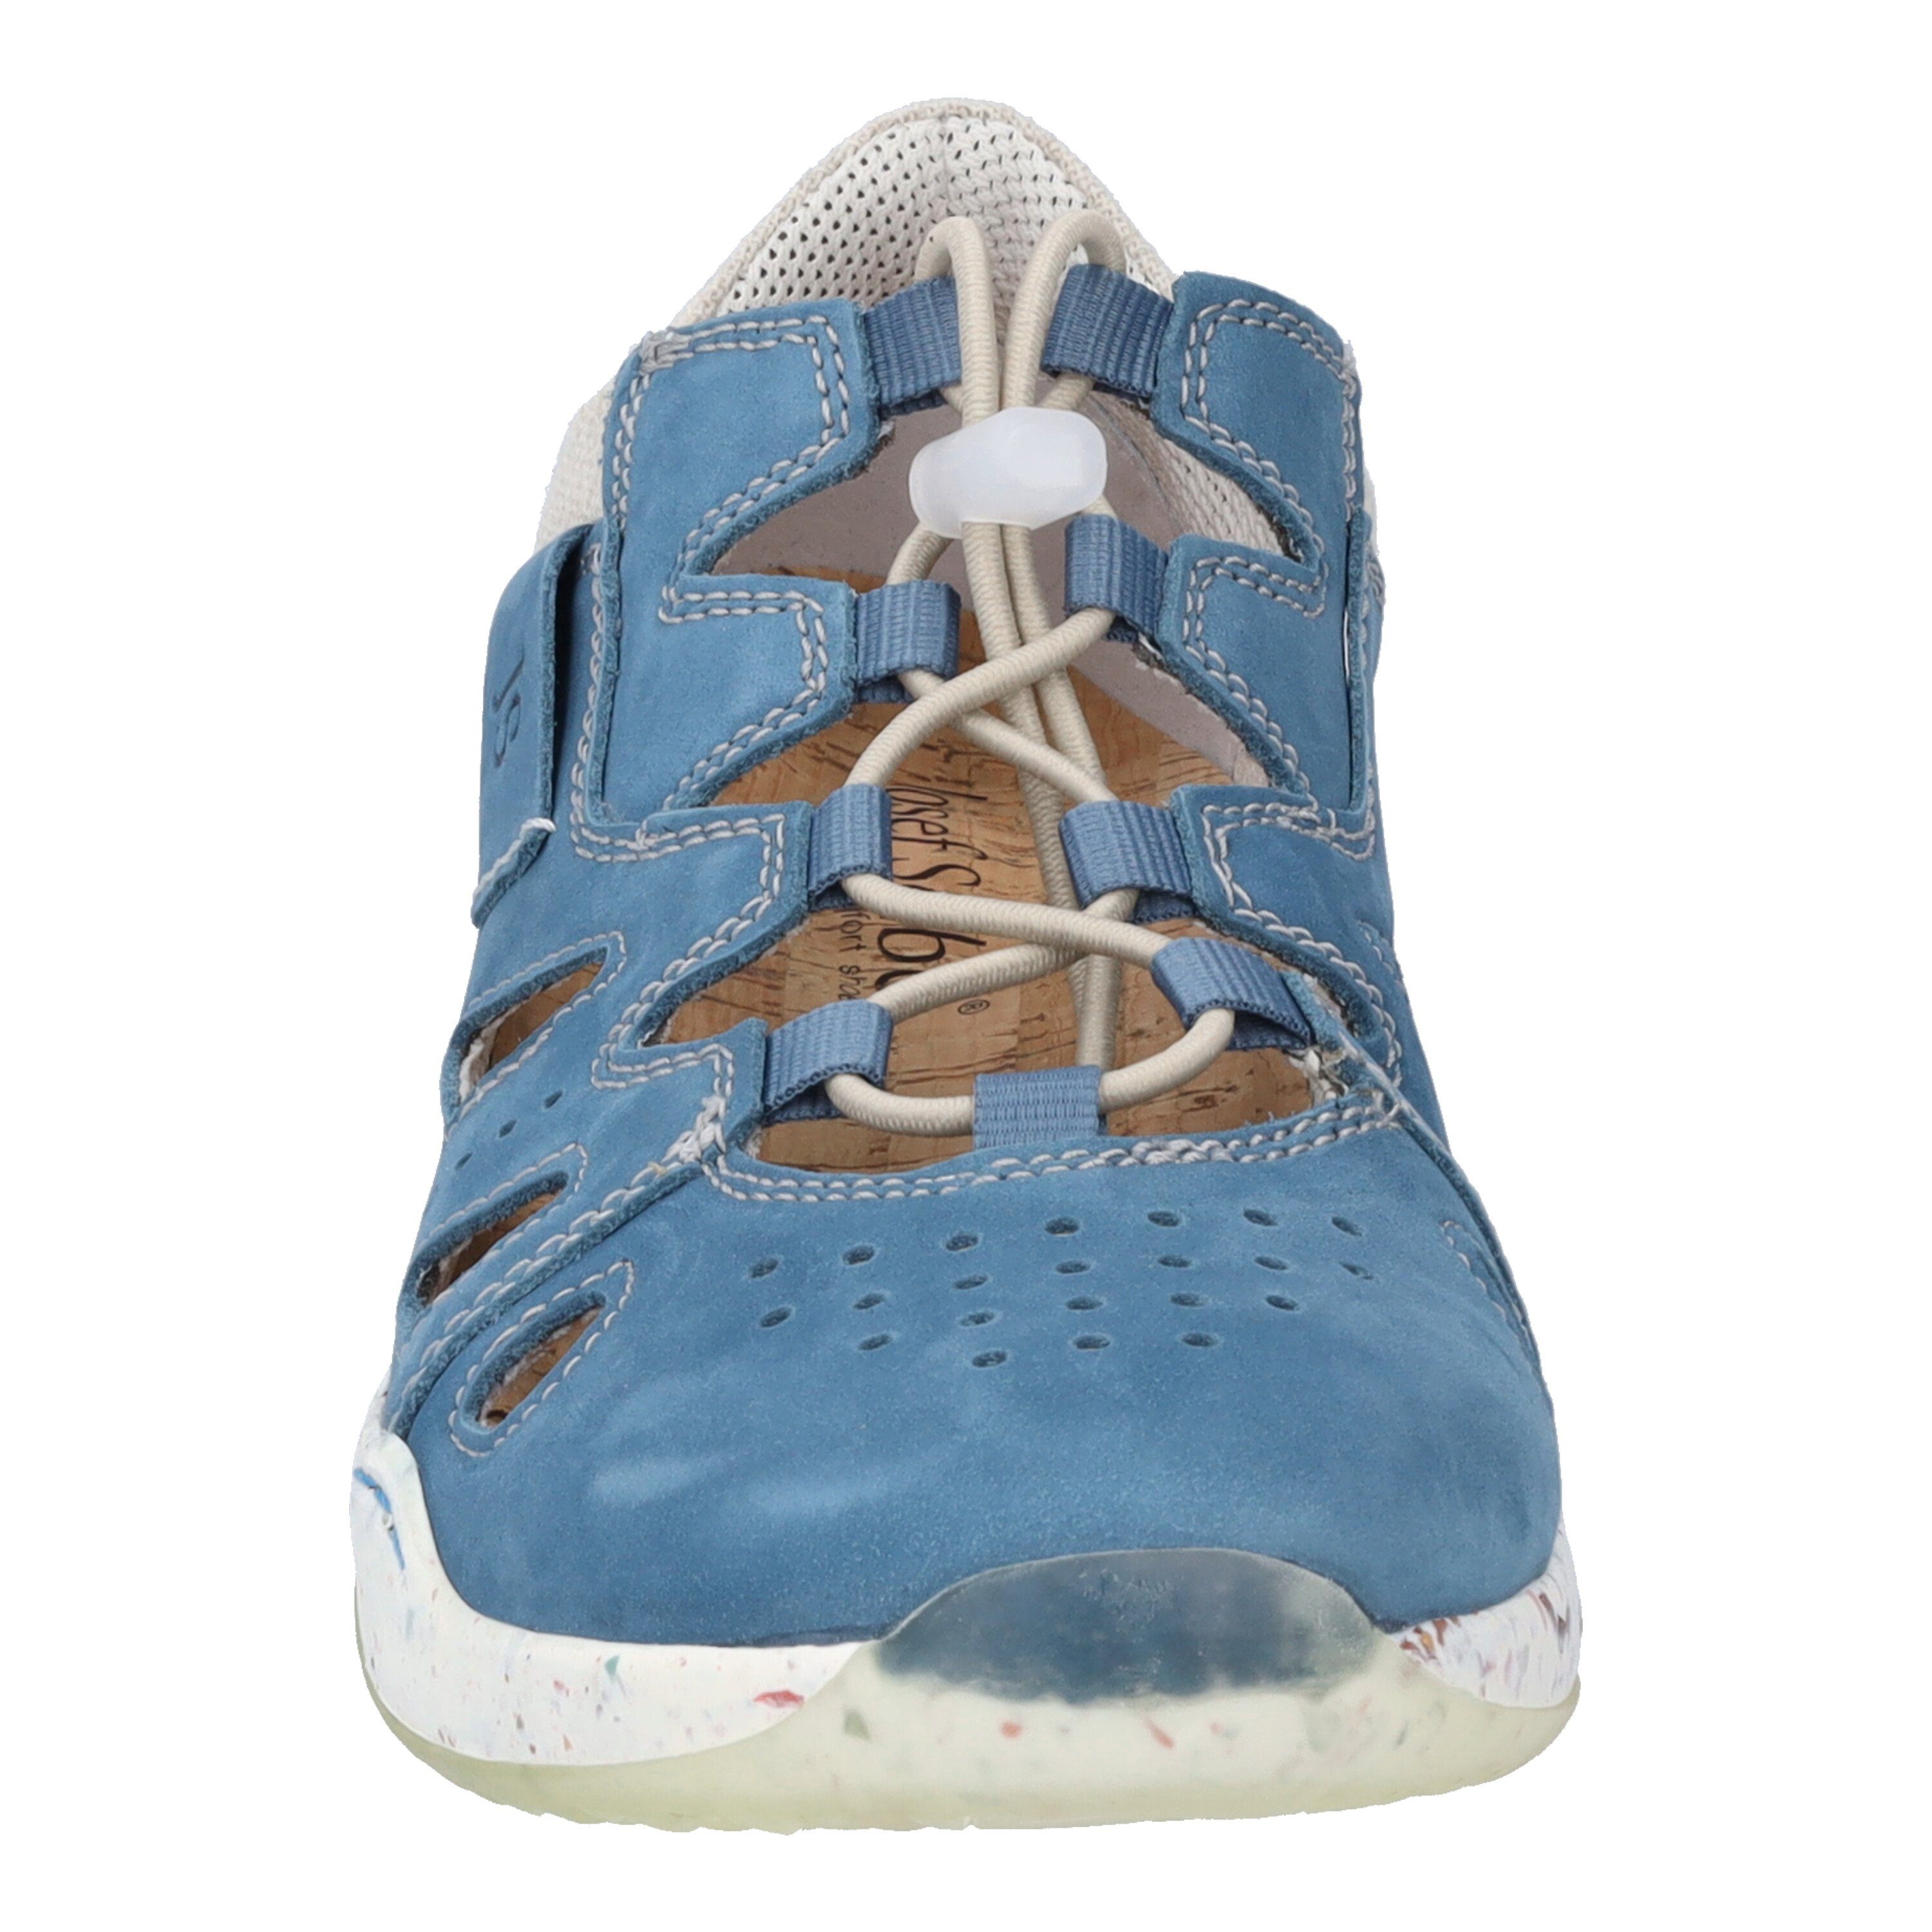 Josef Seibel Ricky Sneaker (10201667) blau 17, blau-kombi